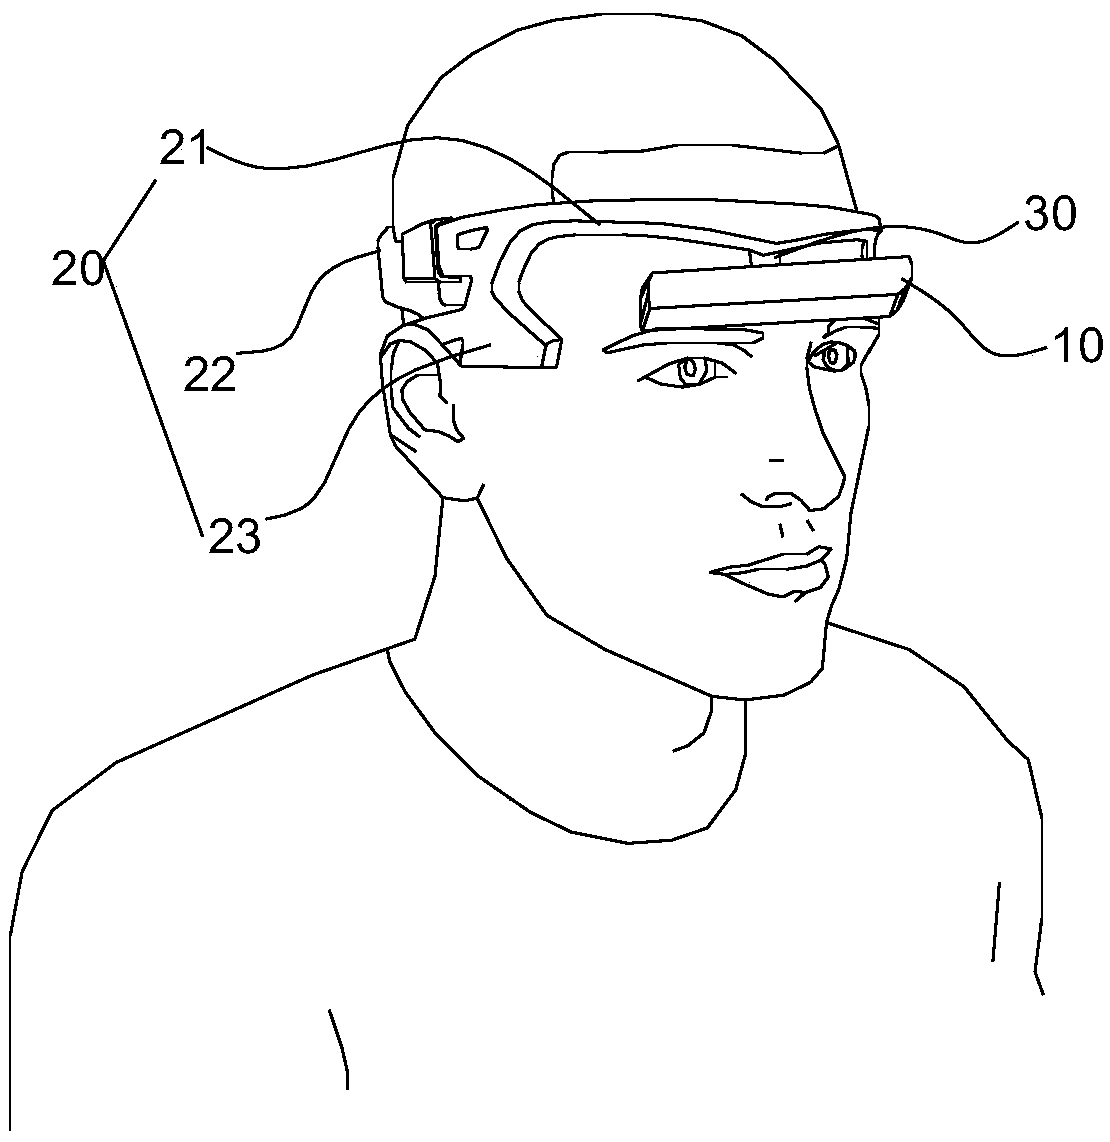 Head-wearing type two-eye displaying device